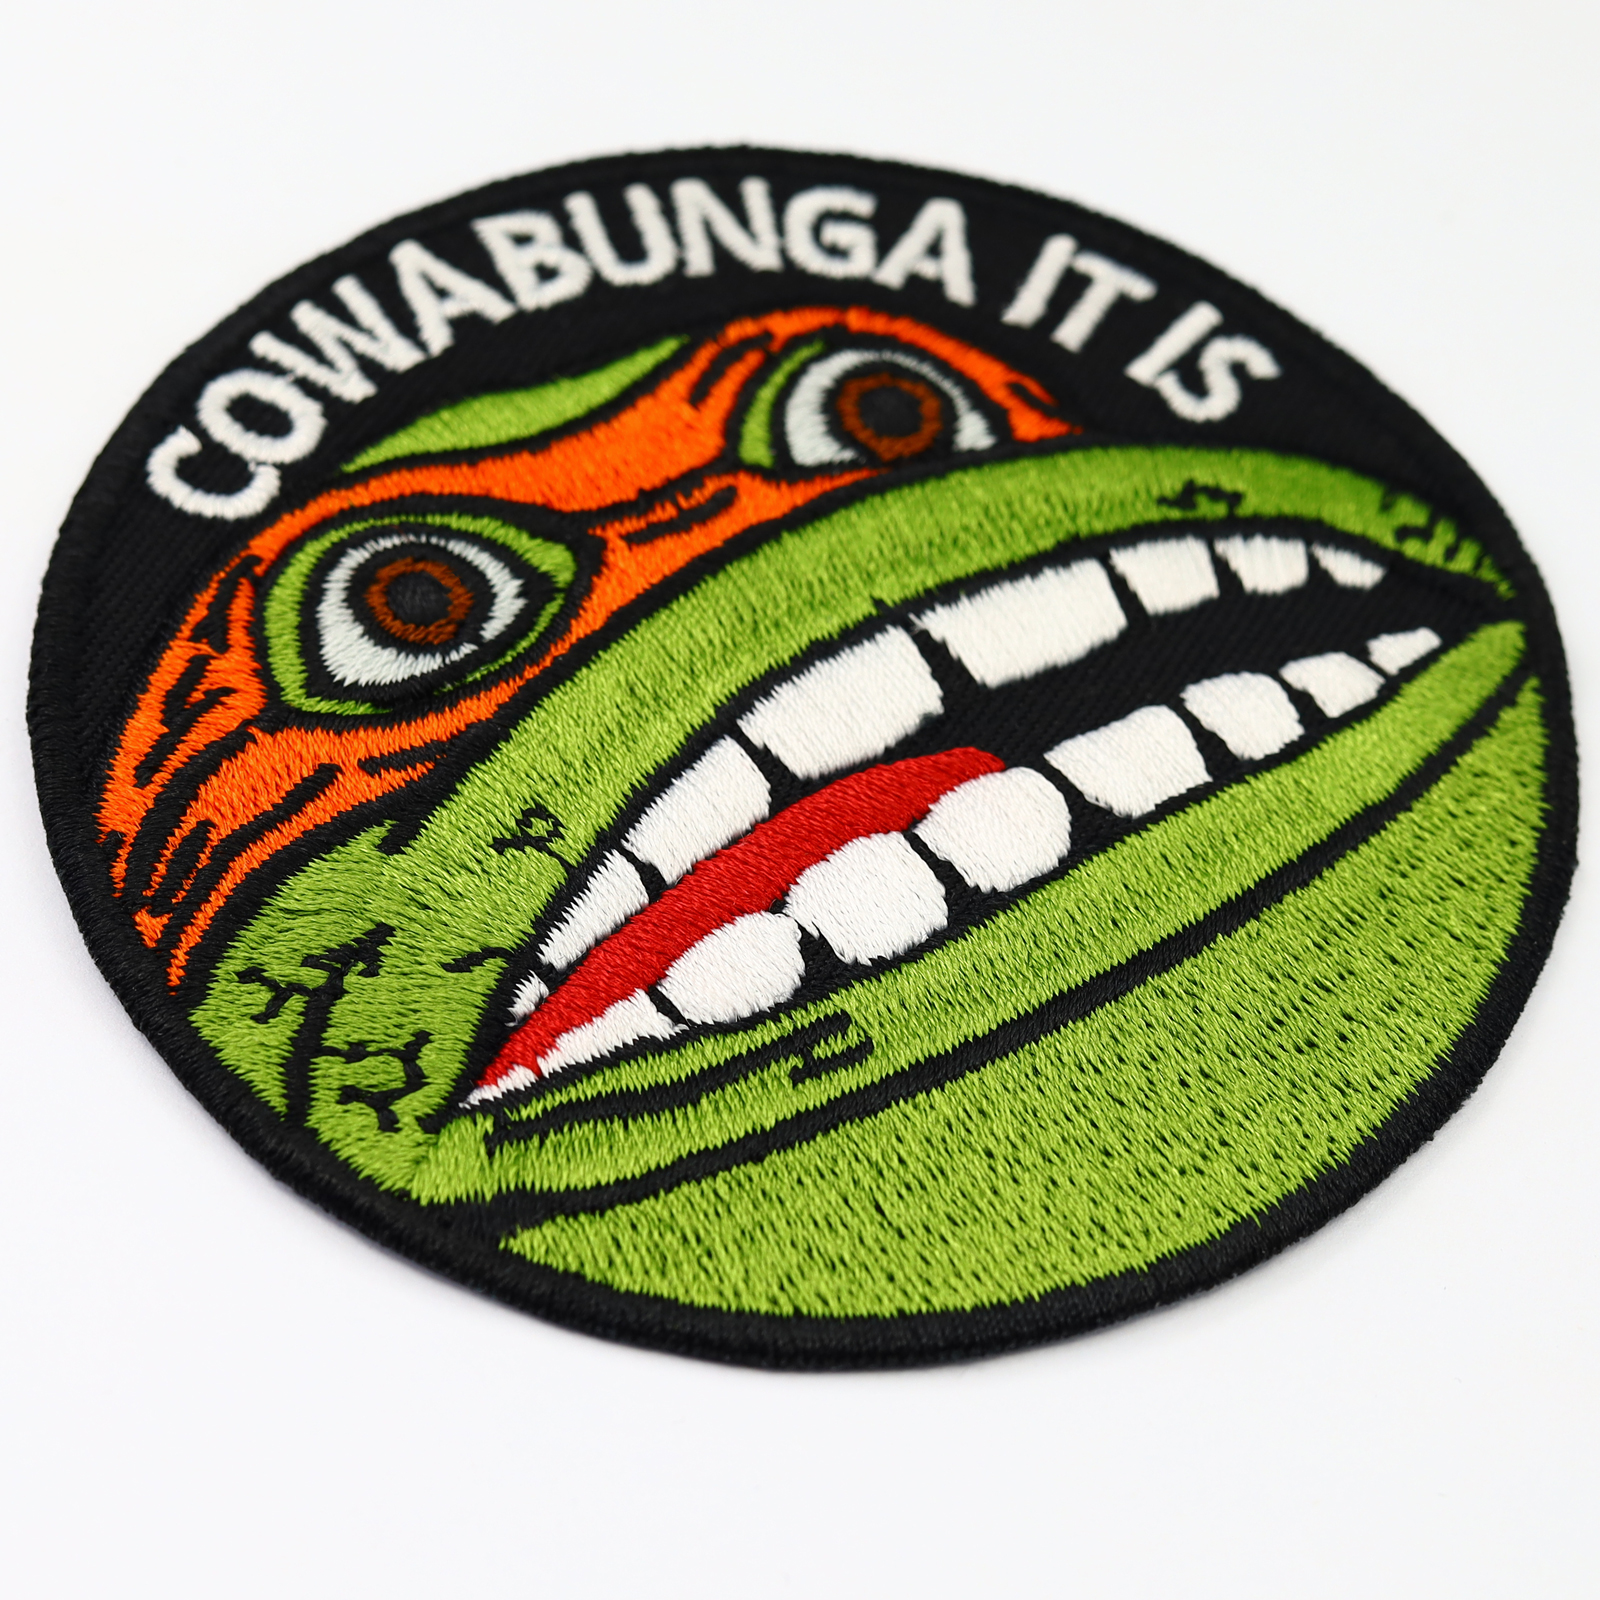 Cowabunga it is - Patch